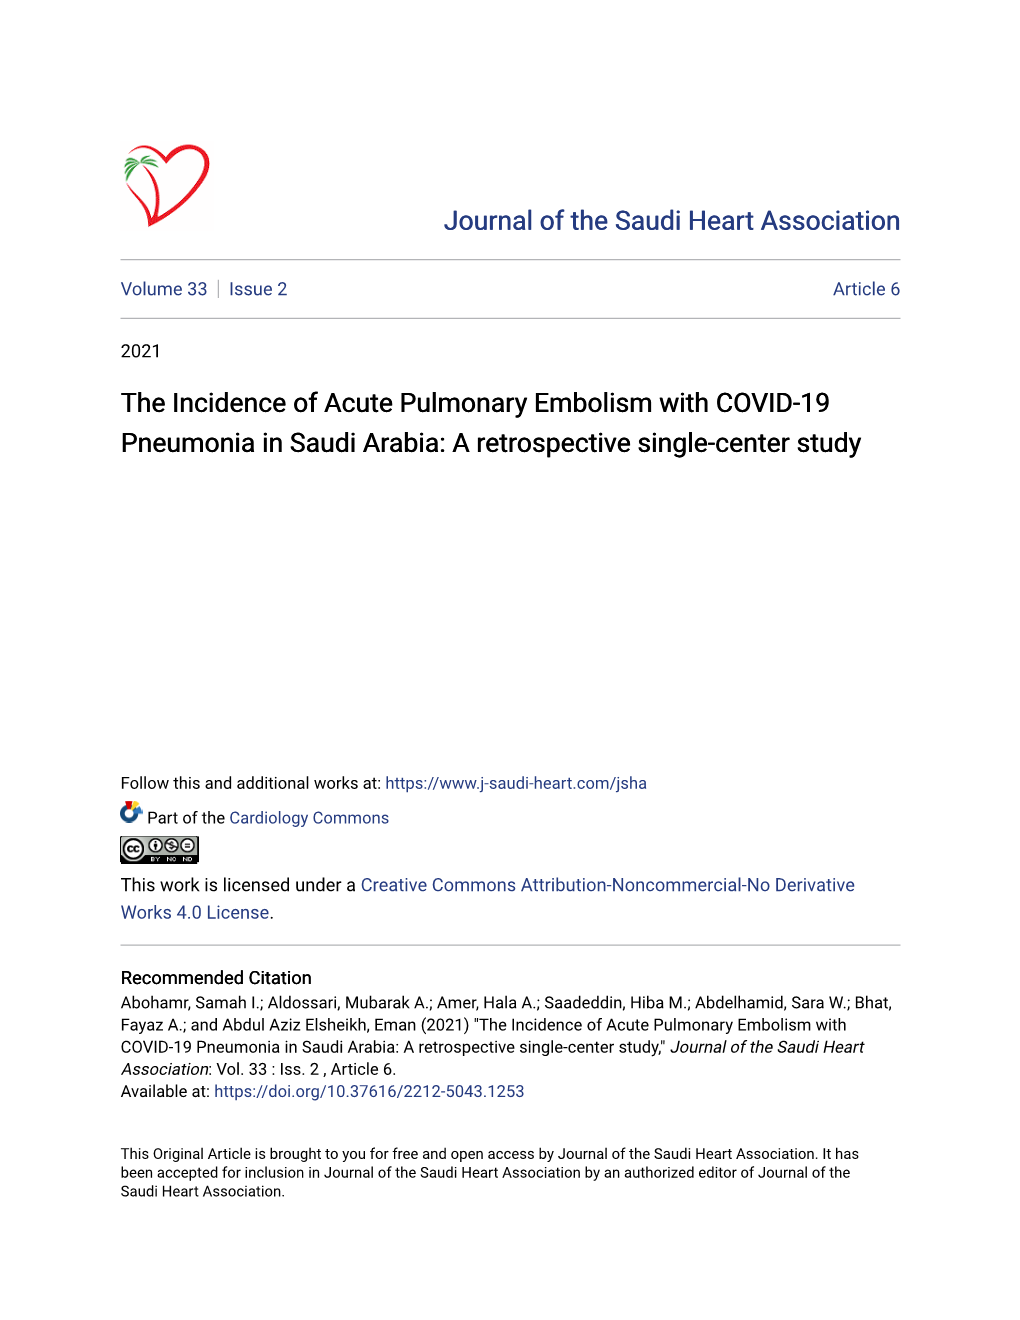 The Incidence of Acute Pulmonary Embolism with COVID-19 Pneumonia in Saudi Arabia: a Retrospective Single-Center Study